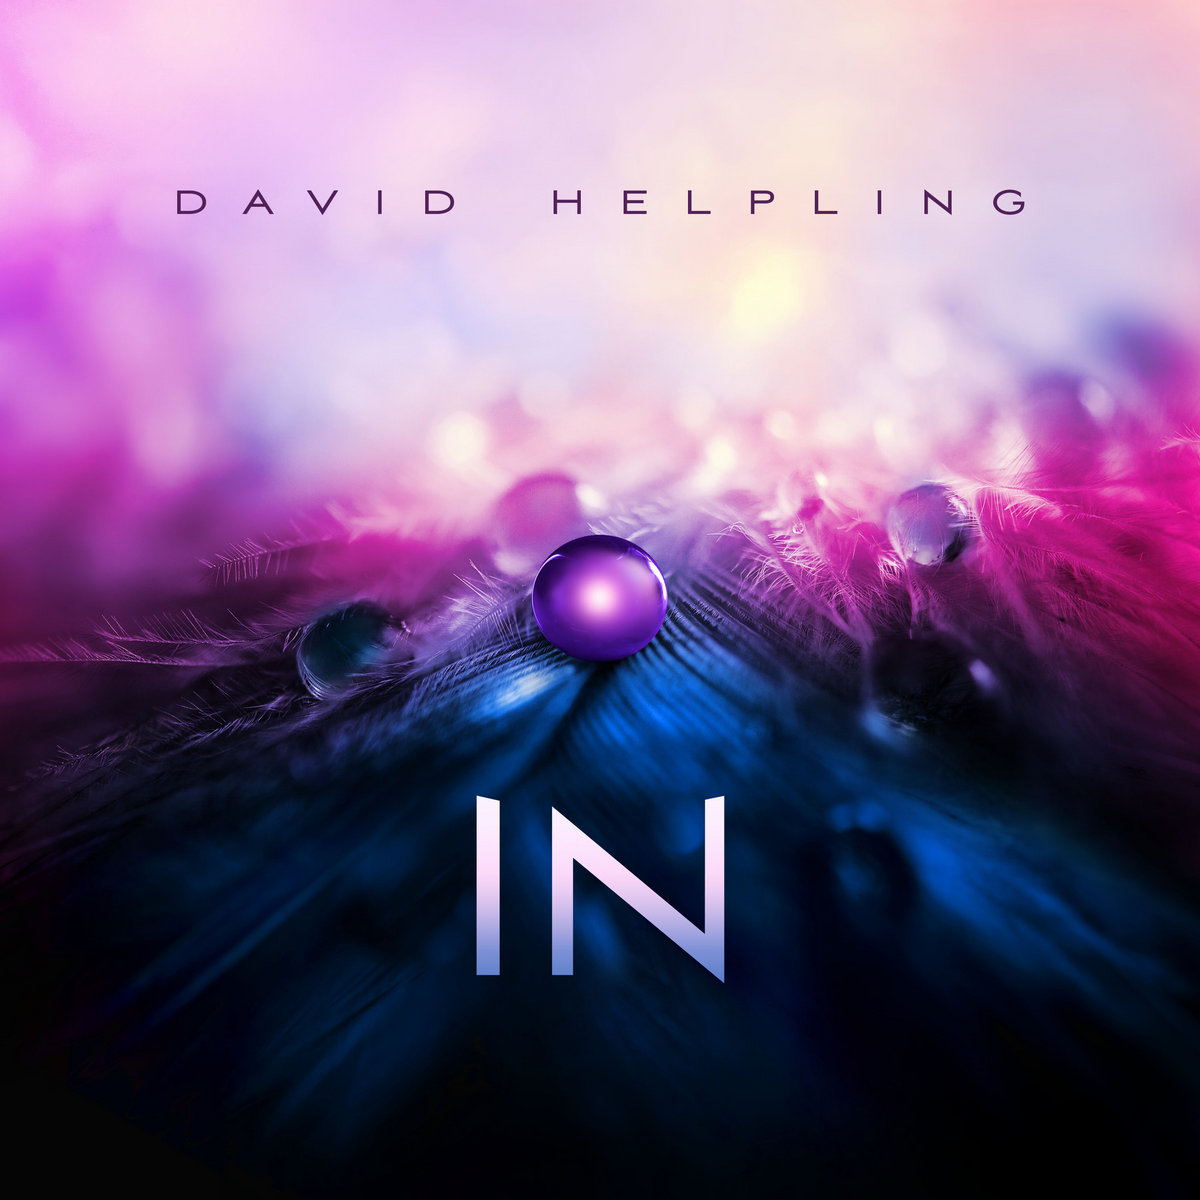 David Helpling - This Burning Sky (Featuring Nidhi Bhatmuley)